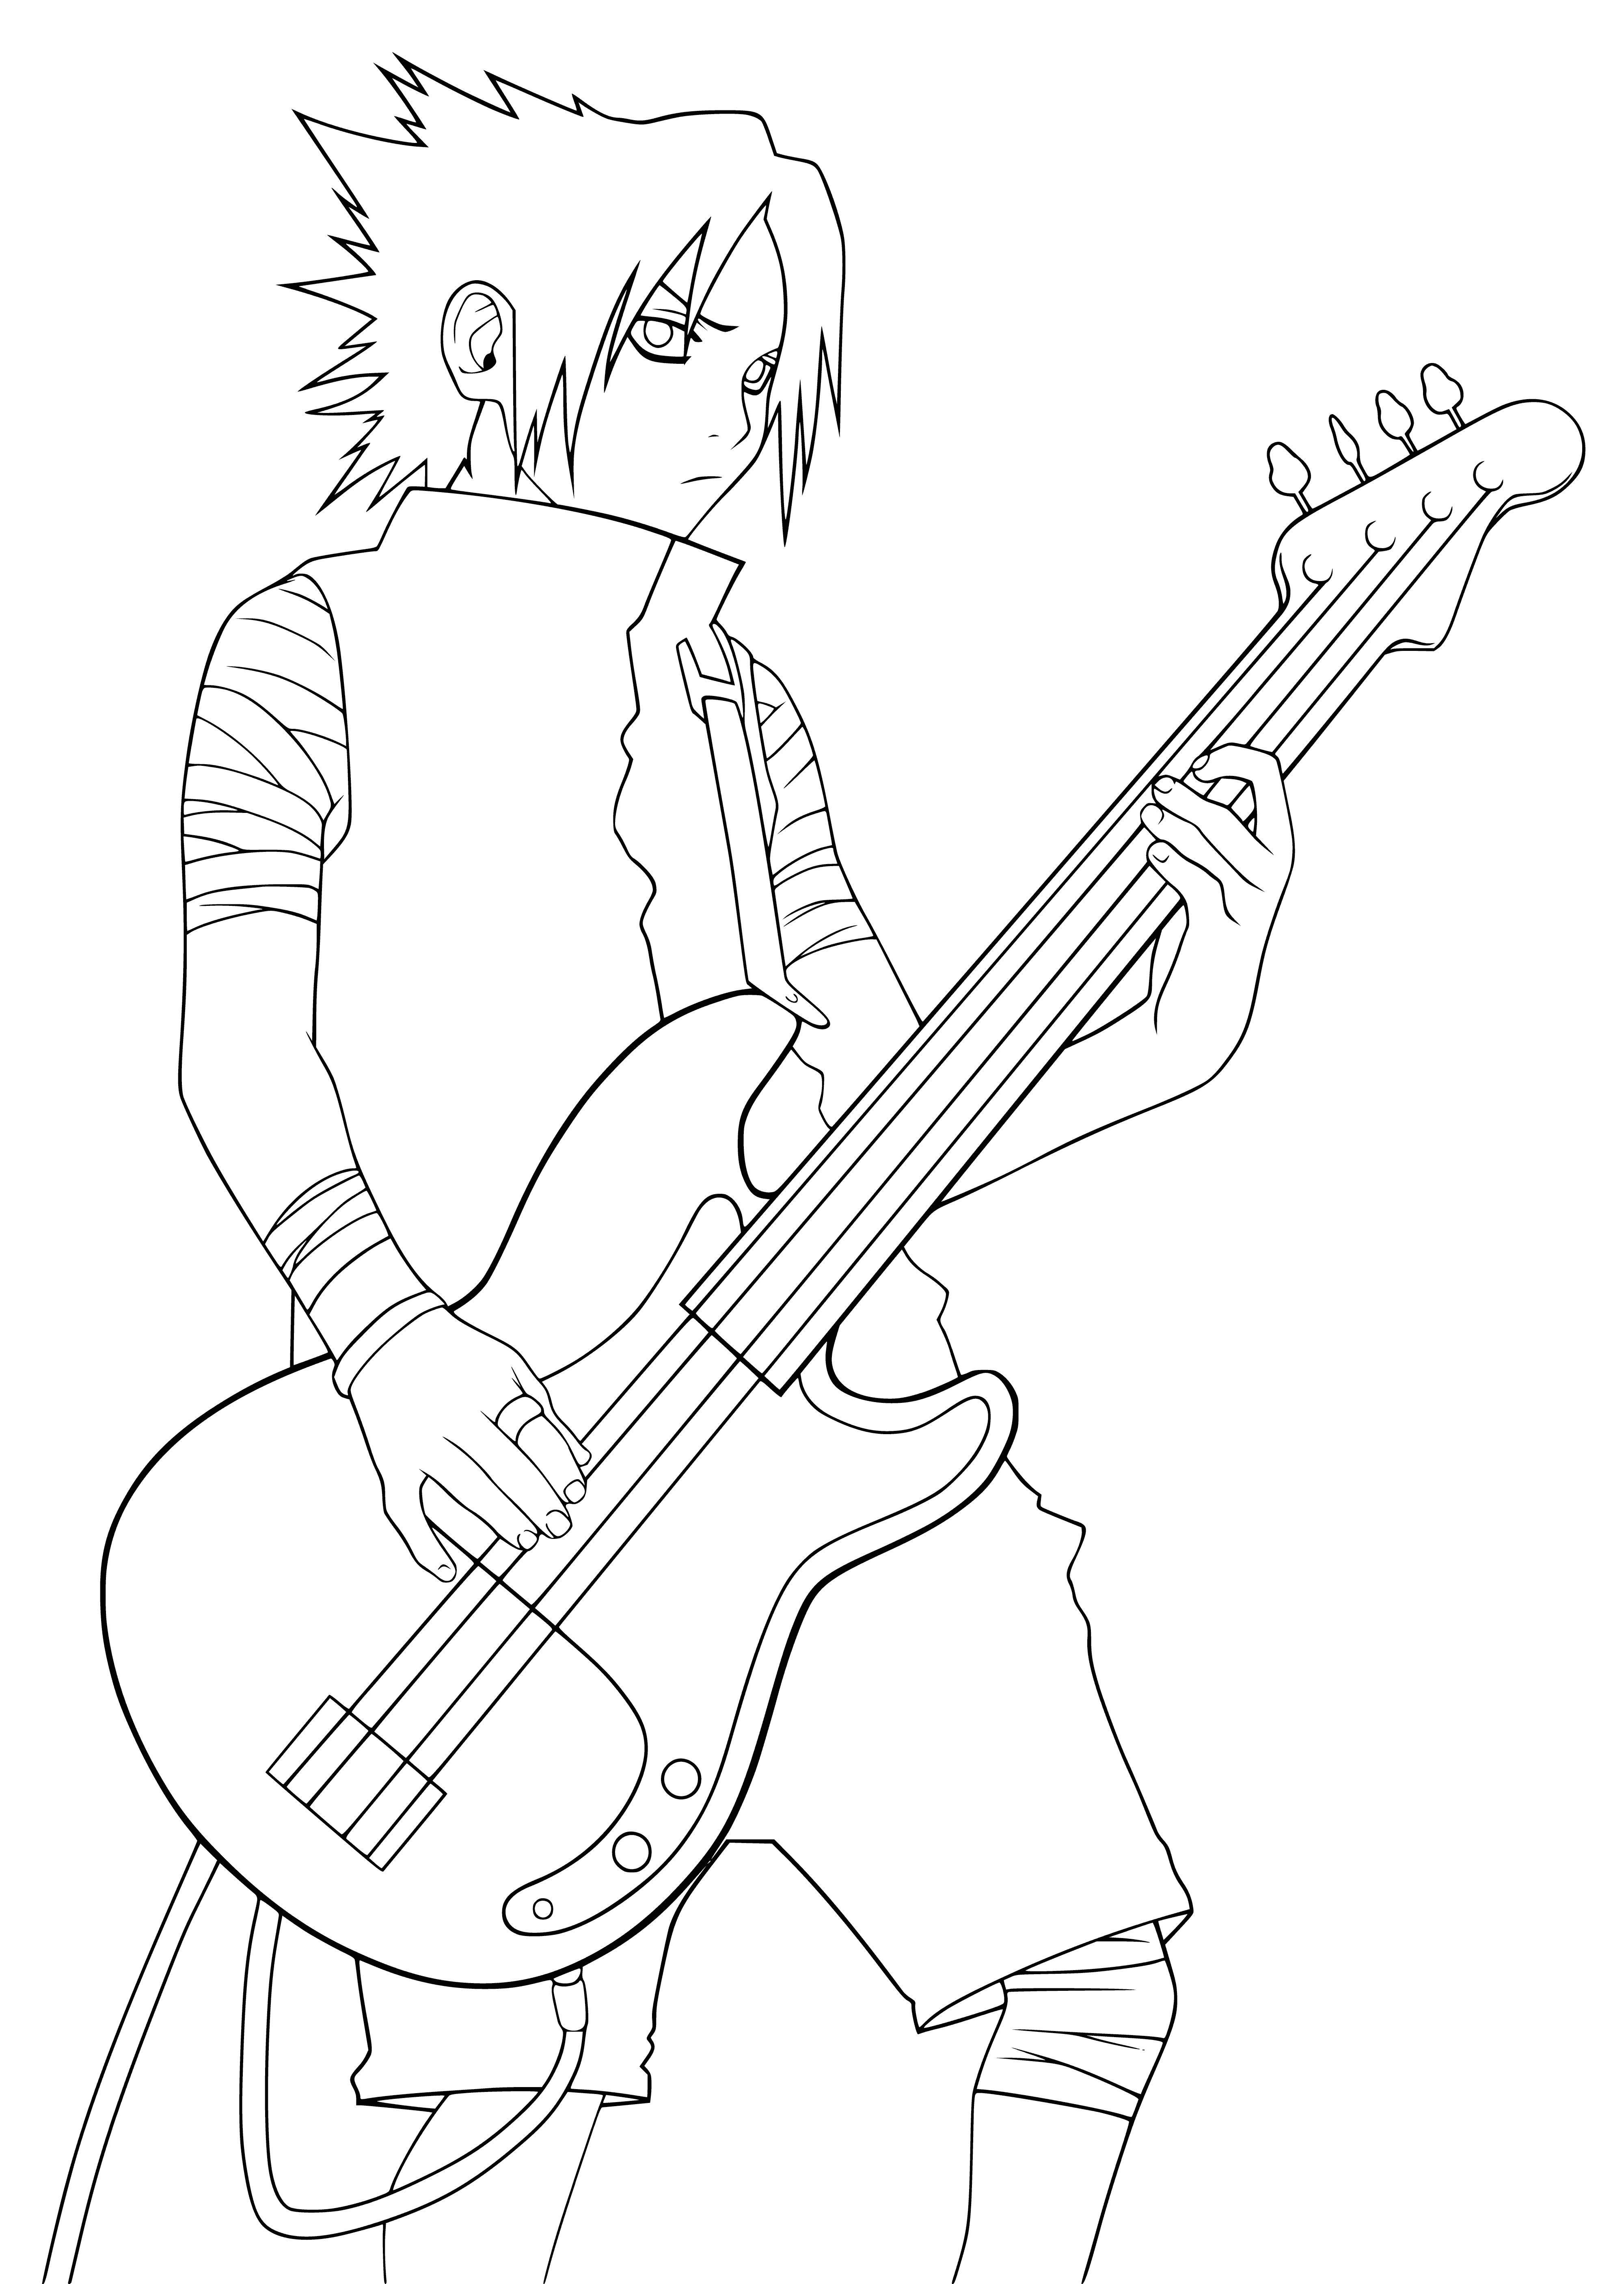 Sasuke bassist coloring page